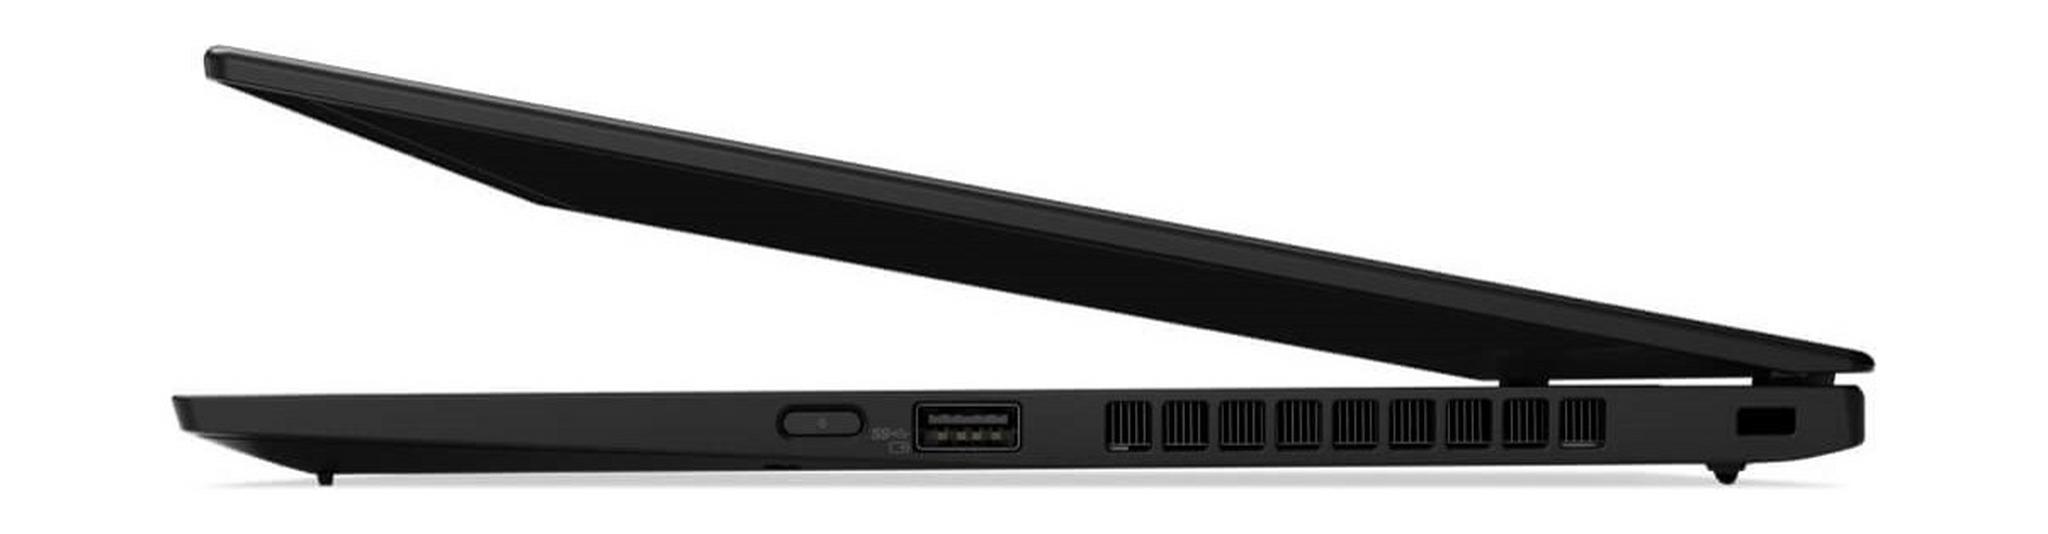 Lenovo X1 Carbon Intel Core i7 8GB RAM 512GB SSD 14-inch Laptop - Black